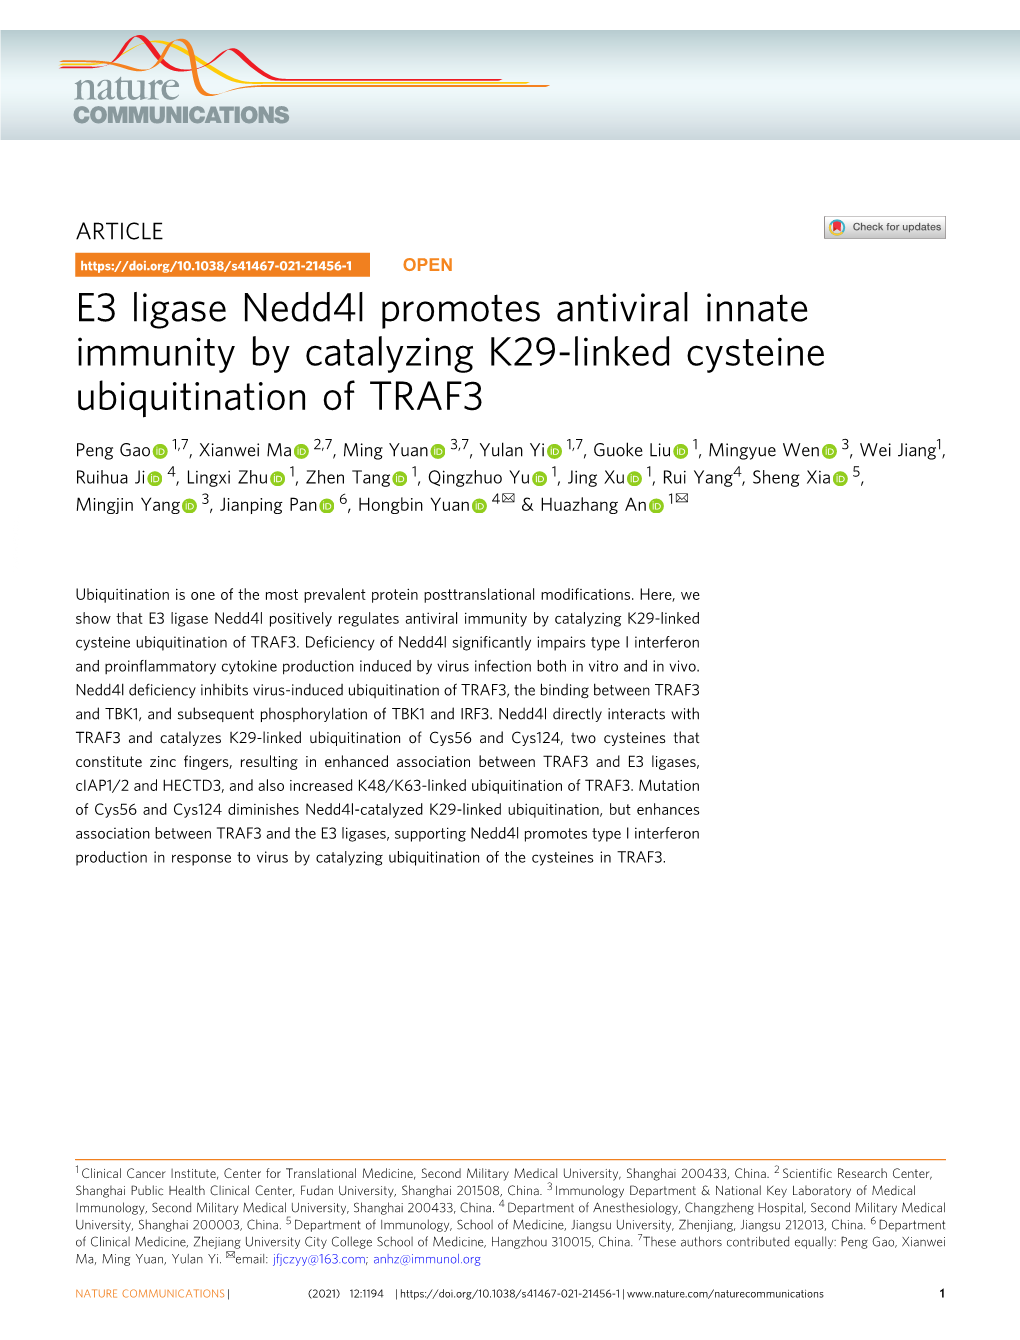 E3 Ligase Nedd4l Promotes Antiviral Innate Immunity by Catalyzing K29-Linked Cysteine Ubiquitination of TRAF3